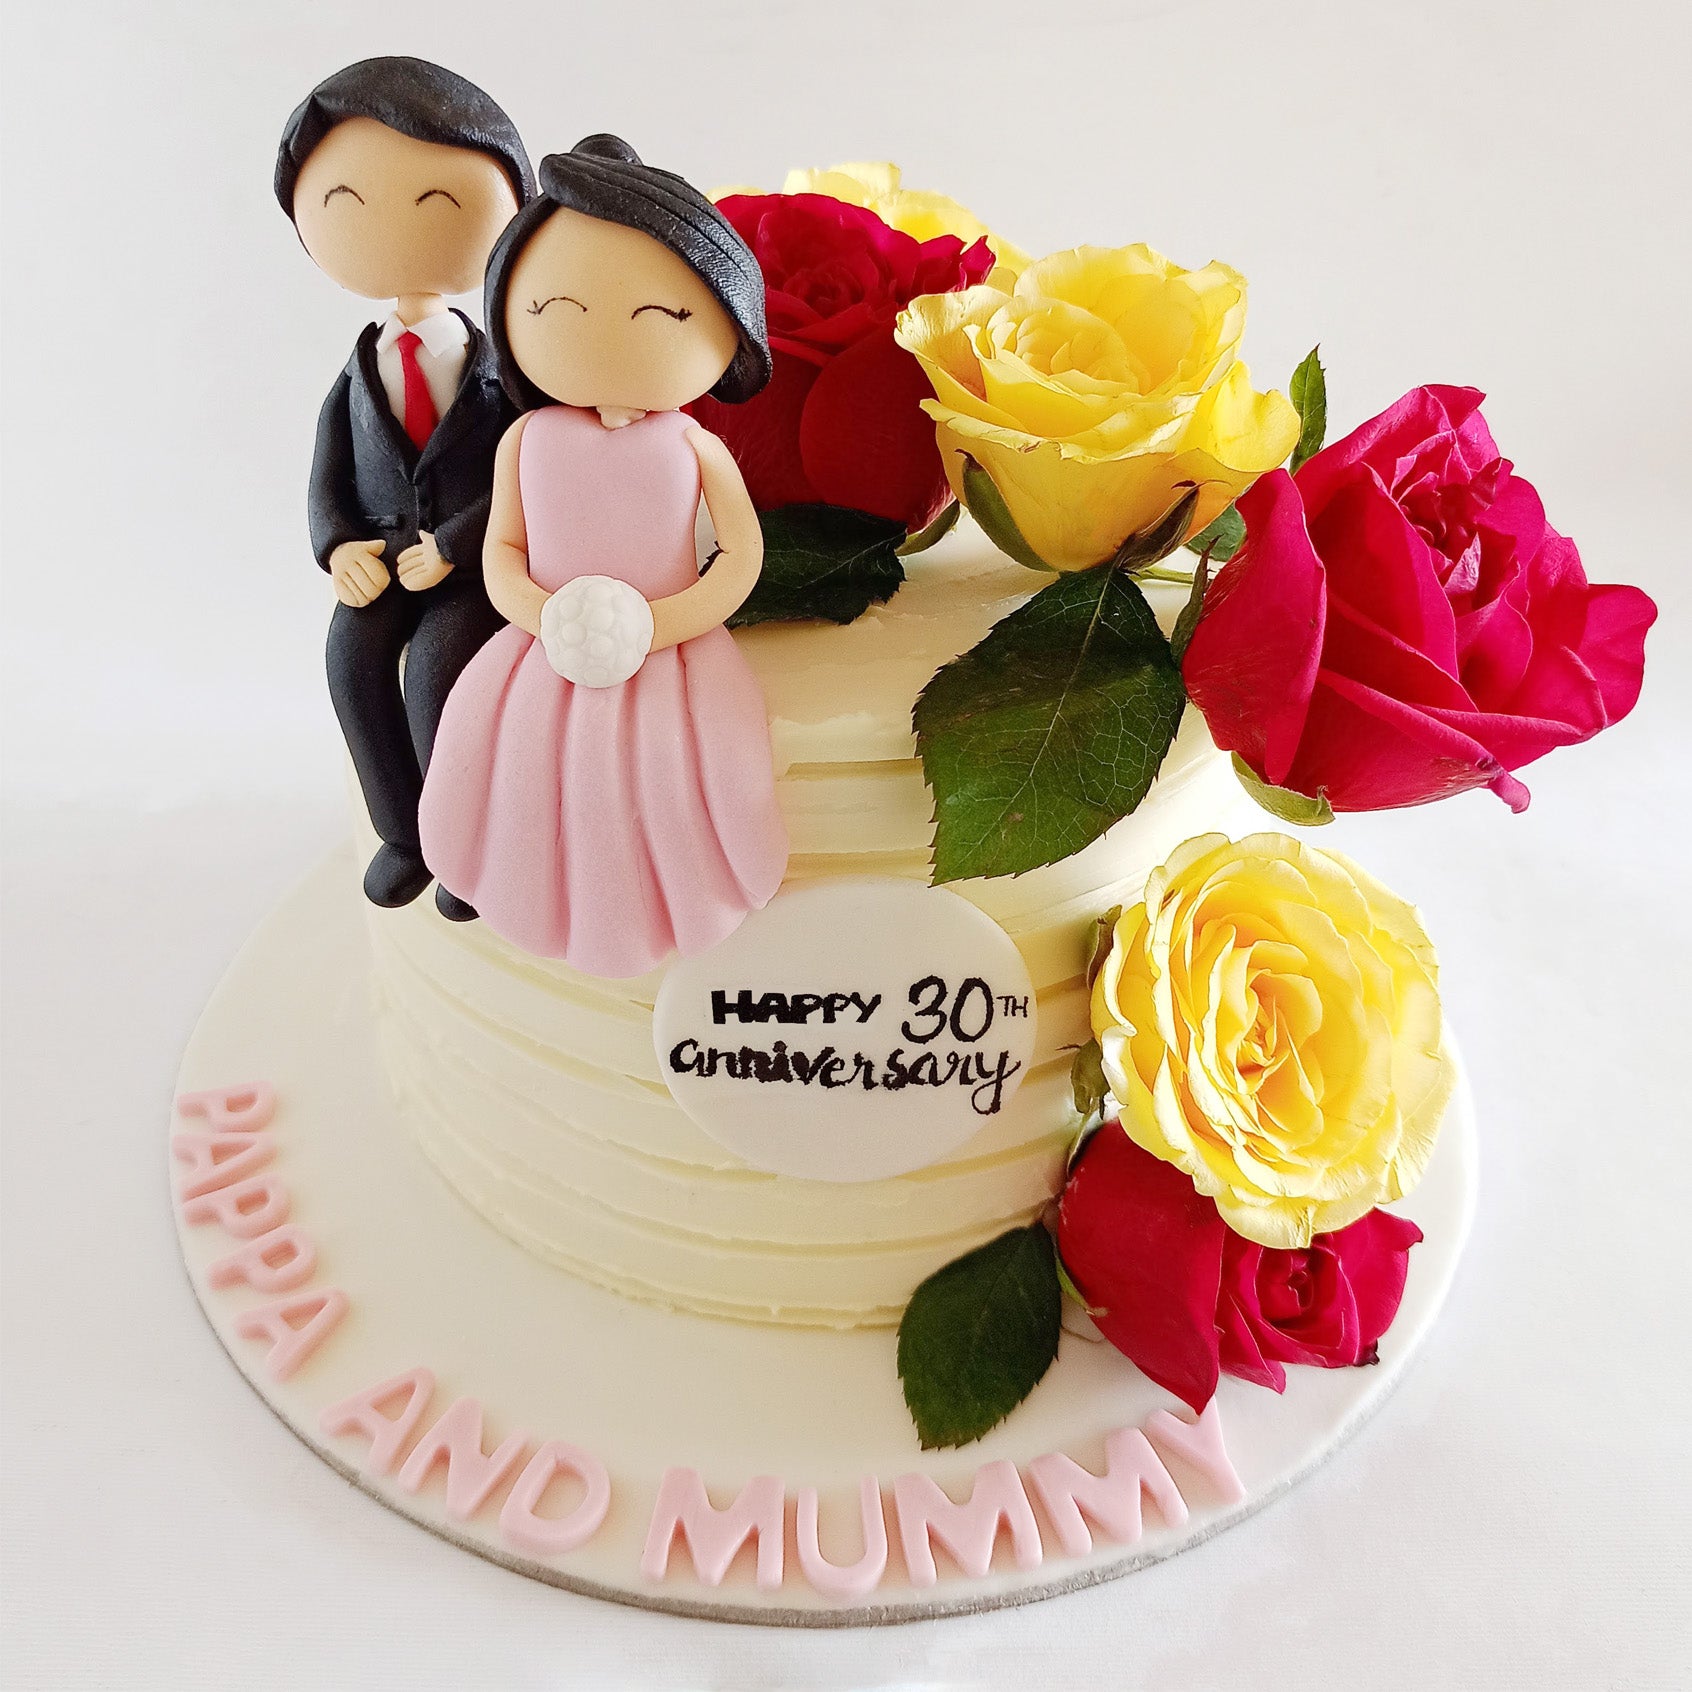 80+ Wedding Anniversary Cake Messages Ideas - WishesMsg